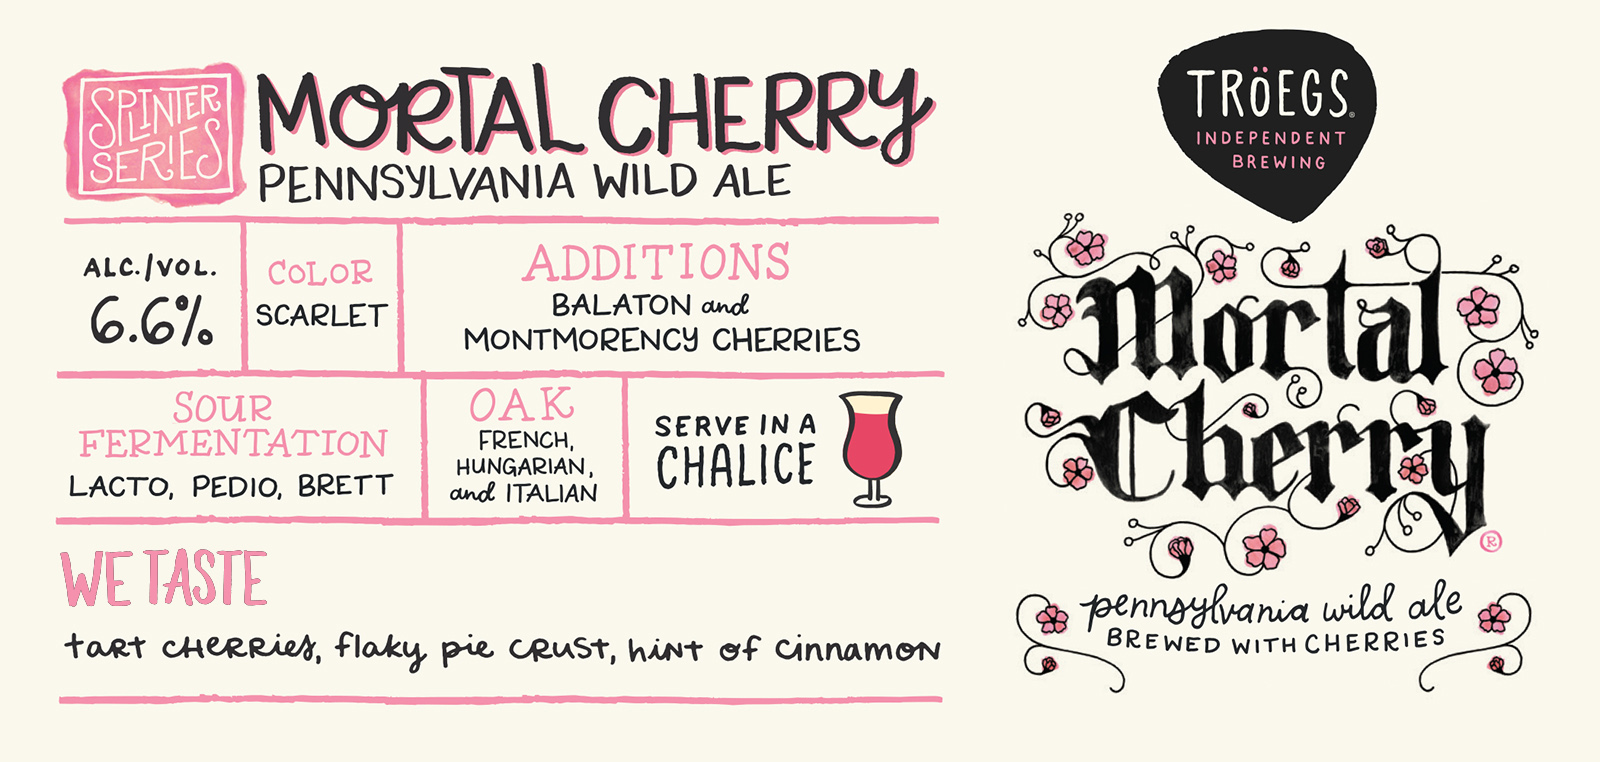 Mortal Cherry info graphic.